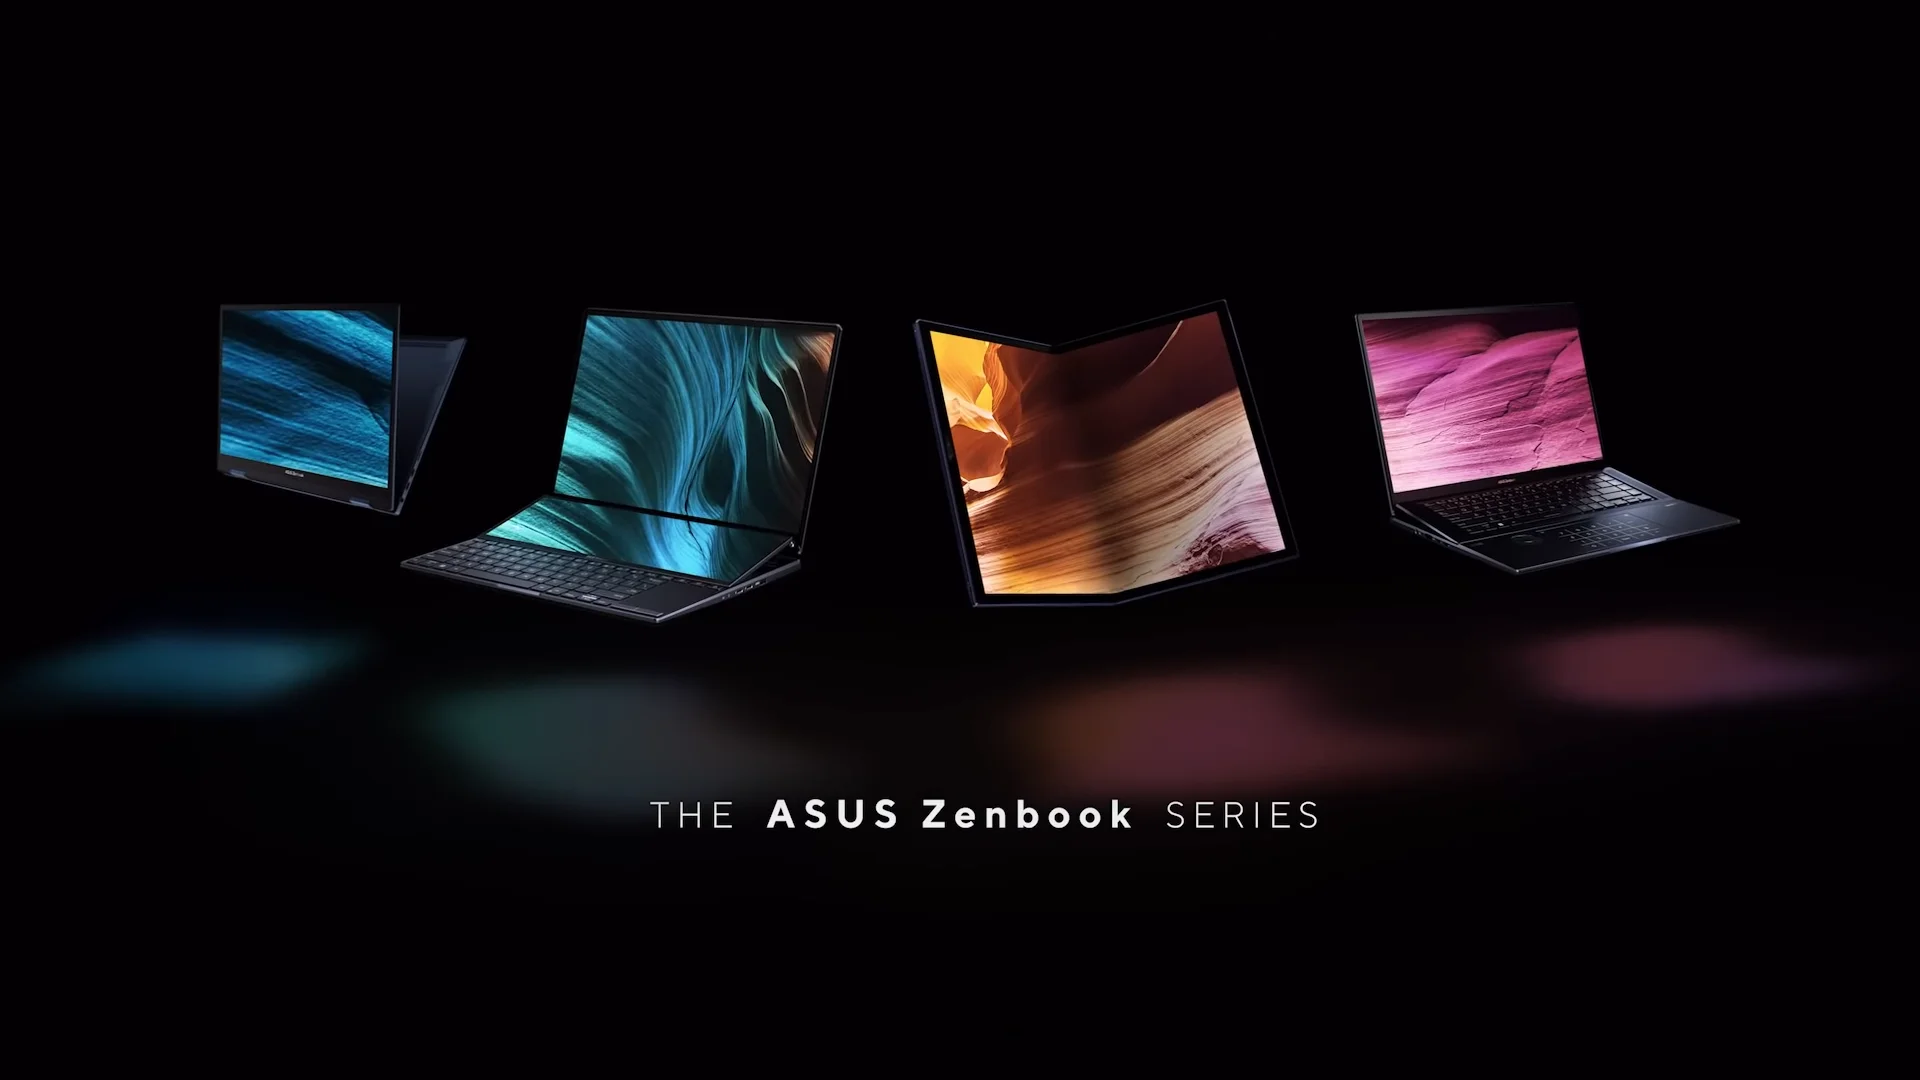 The ASUS Zenbook SERIES